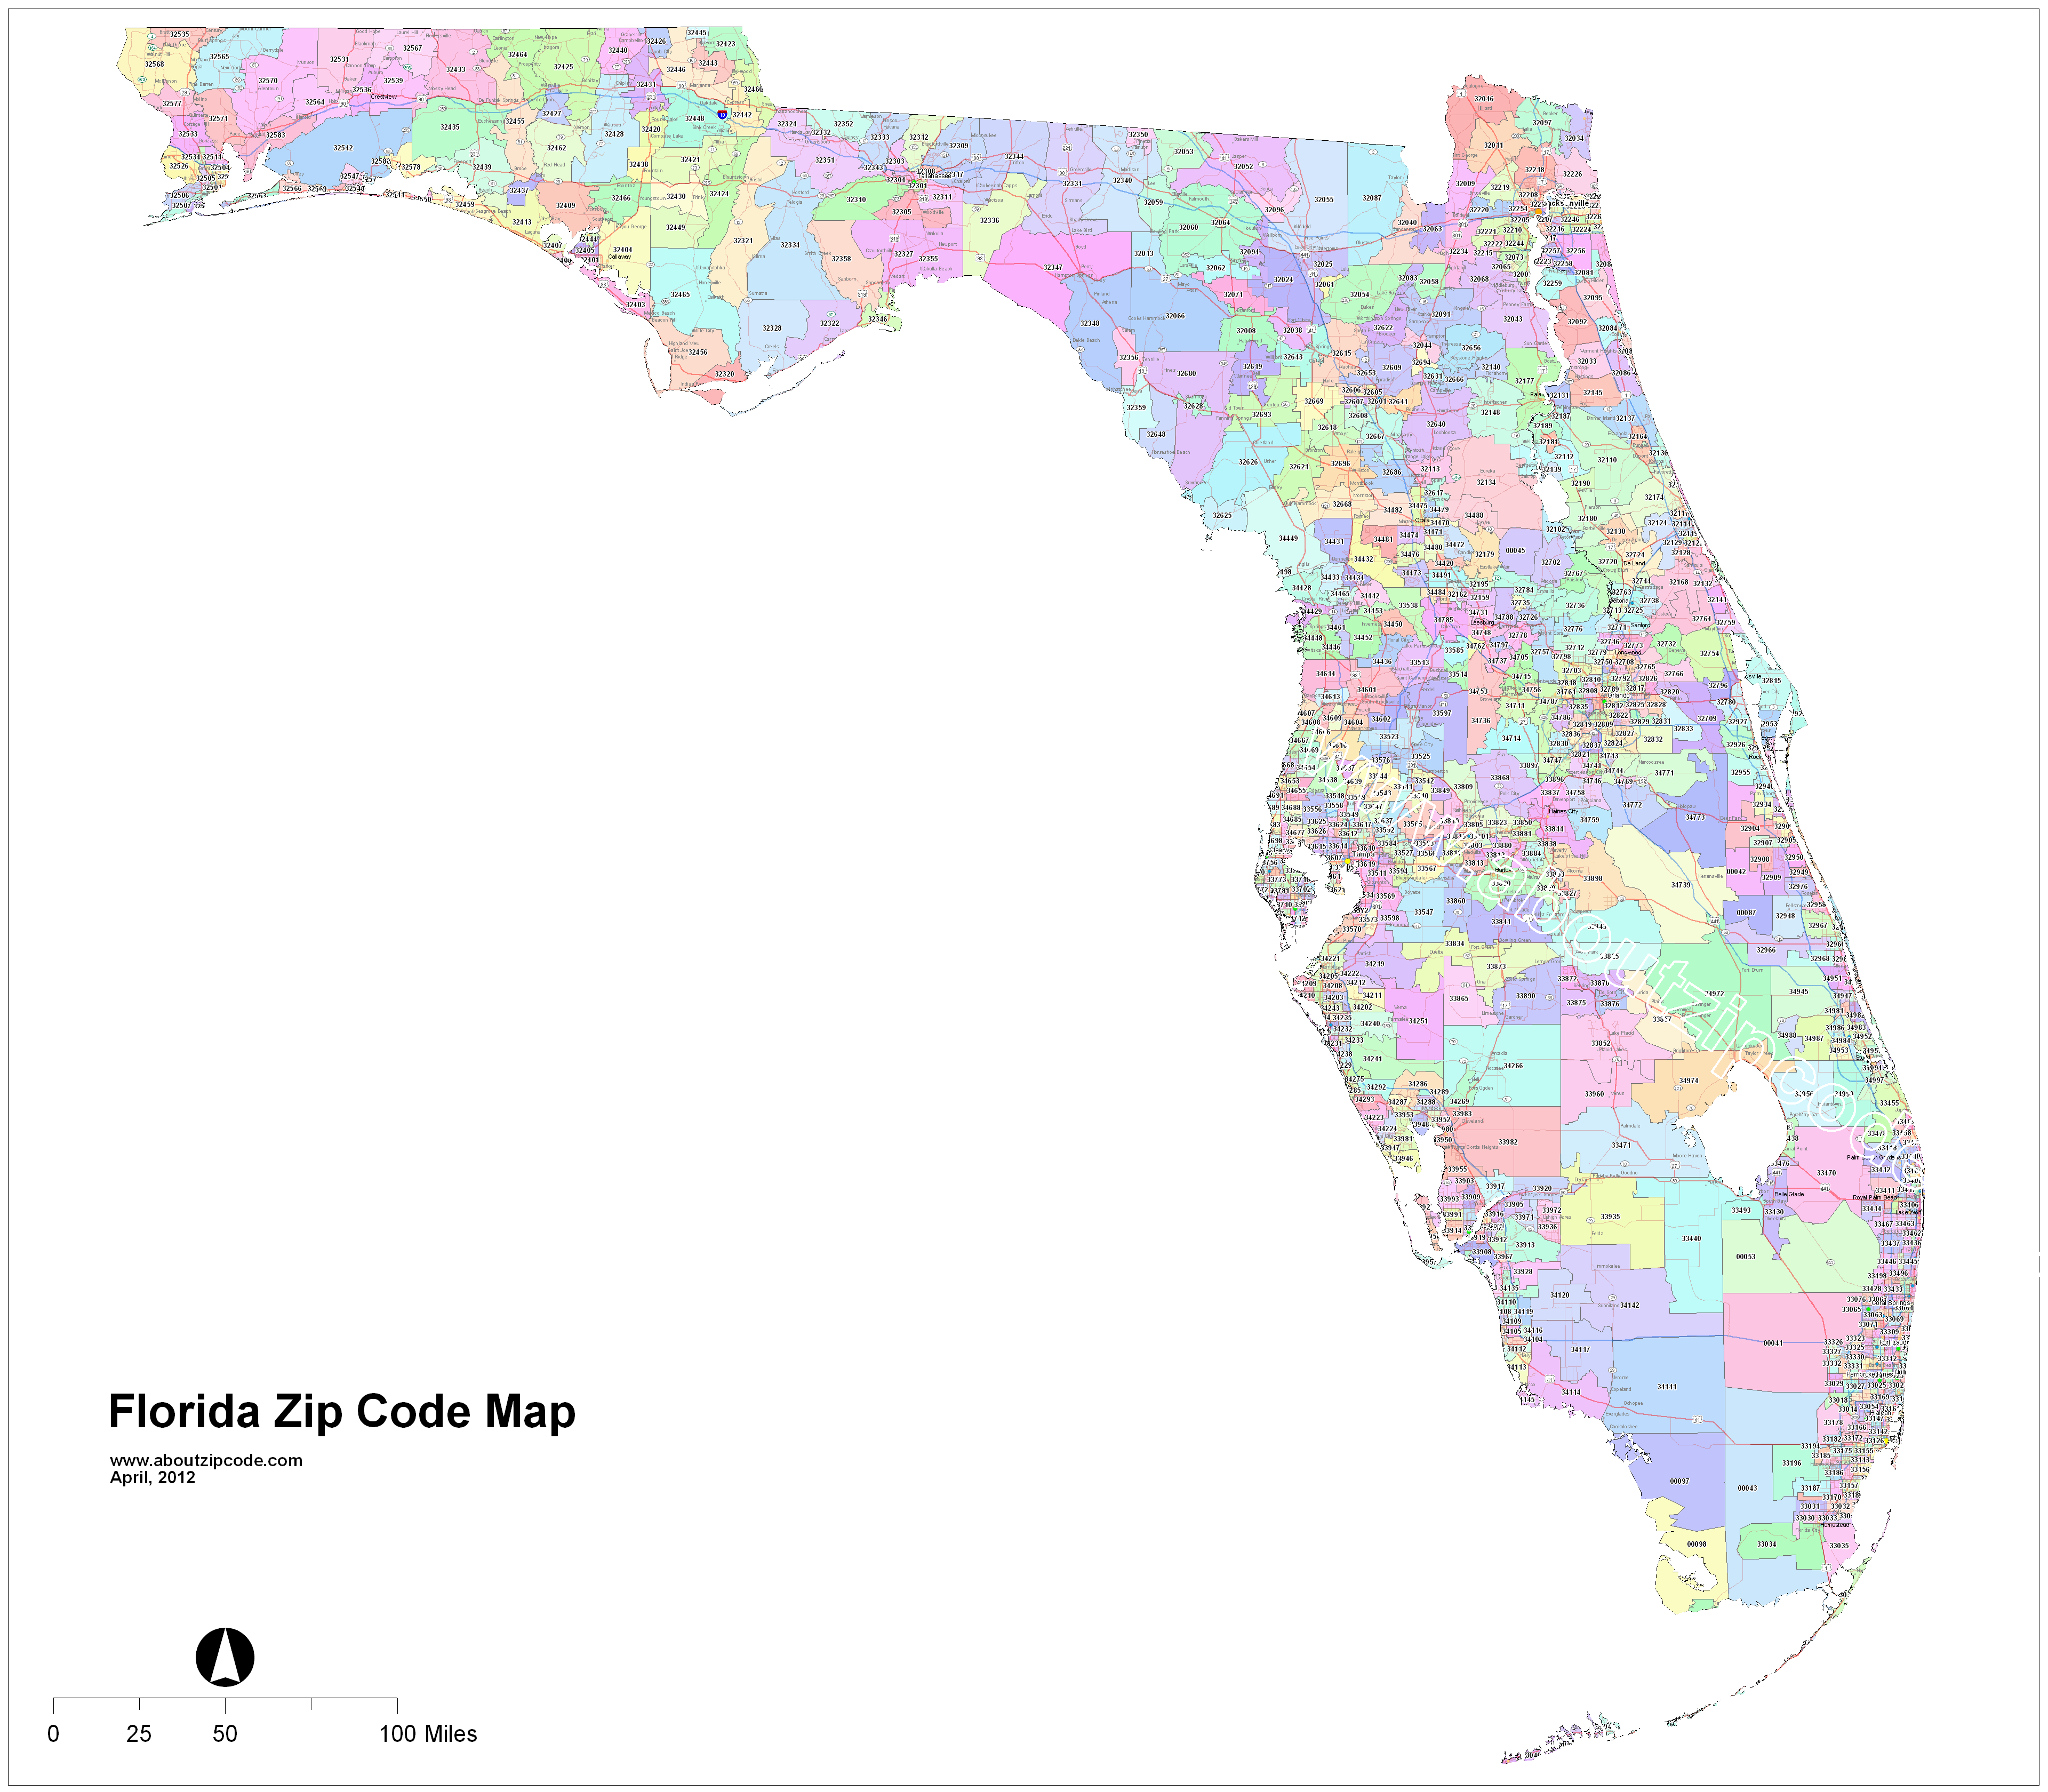 destin fl zip code map Florida Zip Code Maps Free Florida Zip Code Maps destin fl zip code map